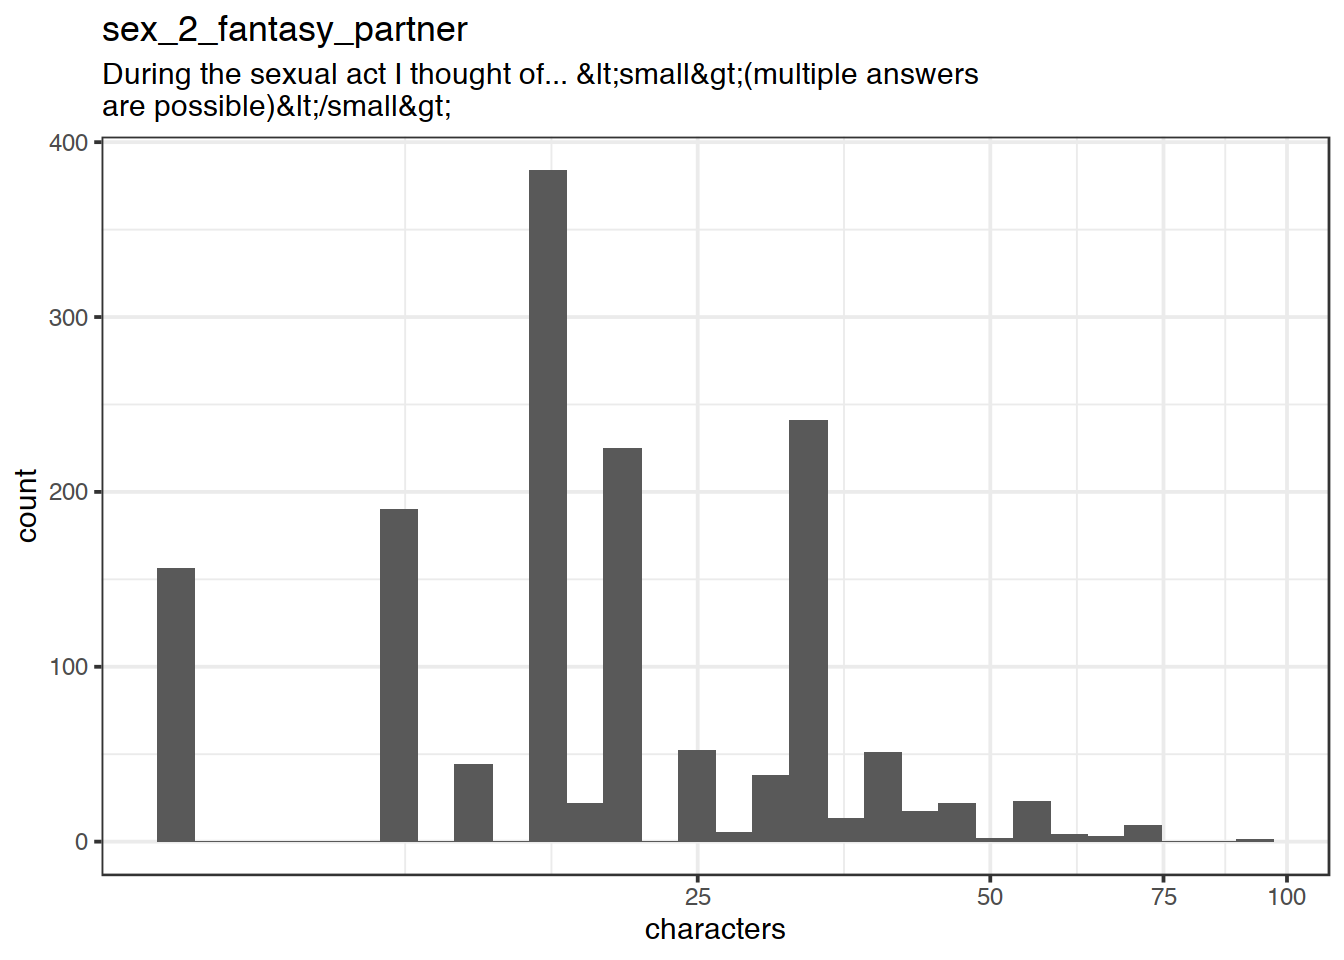 Distribution of values for sex_2_fantasy_partner